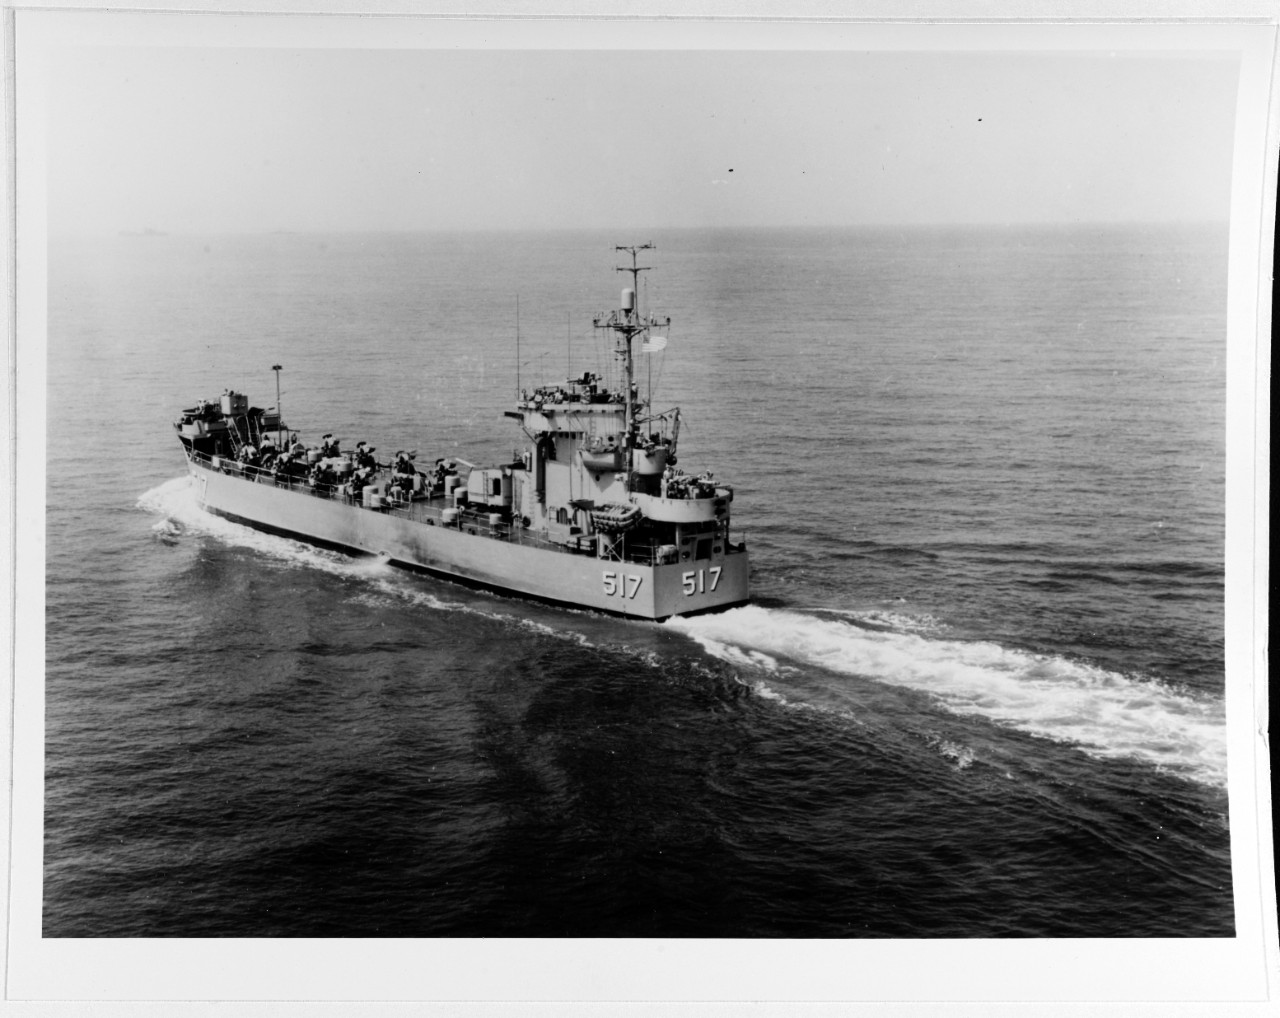 USS LSMR-517